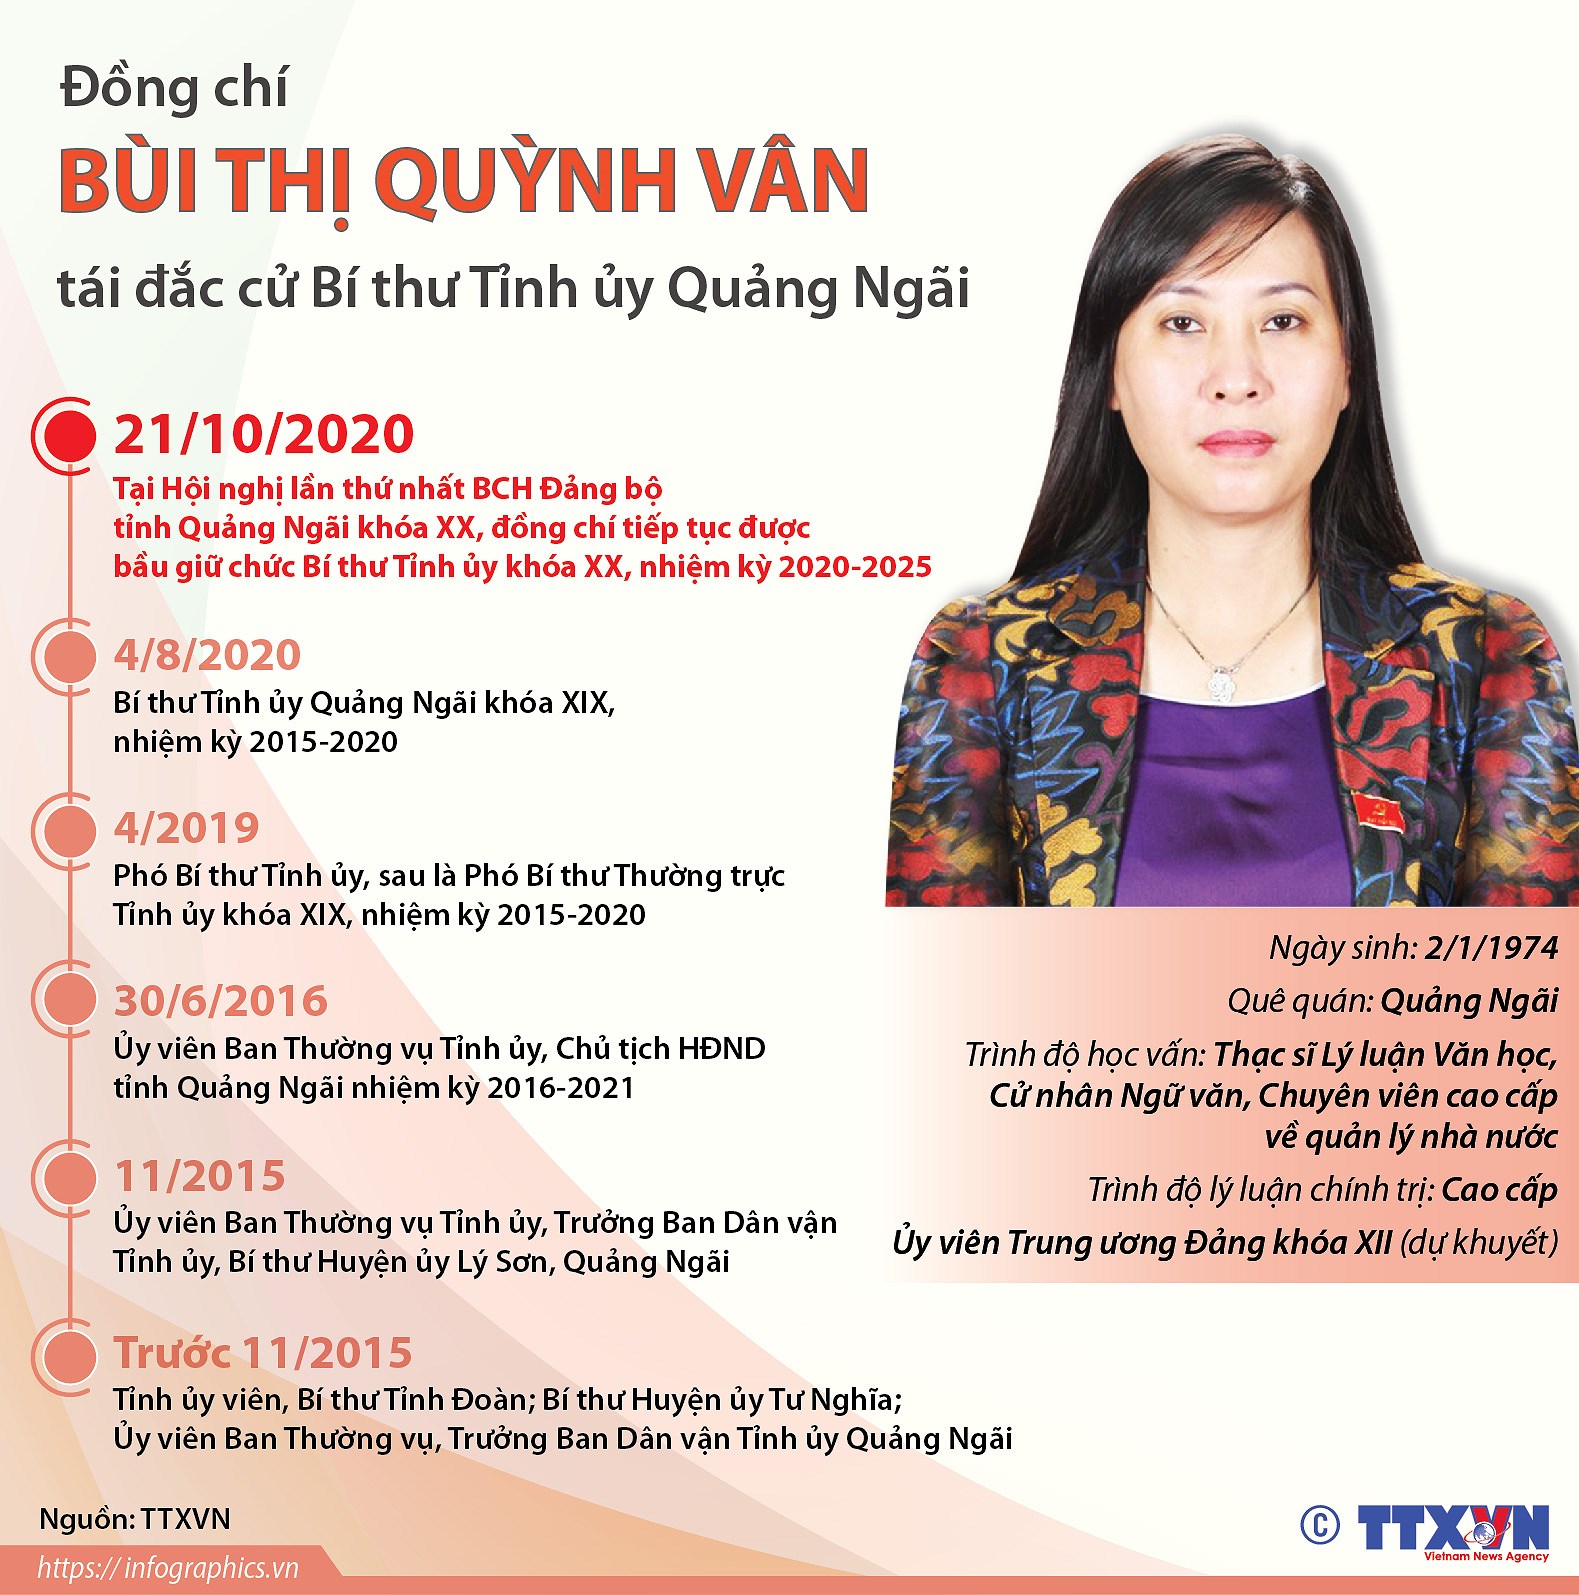 [Infographics] Bi thu Tinh uy Quang Ngai Bui Thi Quynh Van hinh anh 1